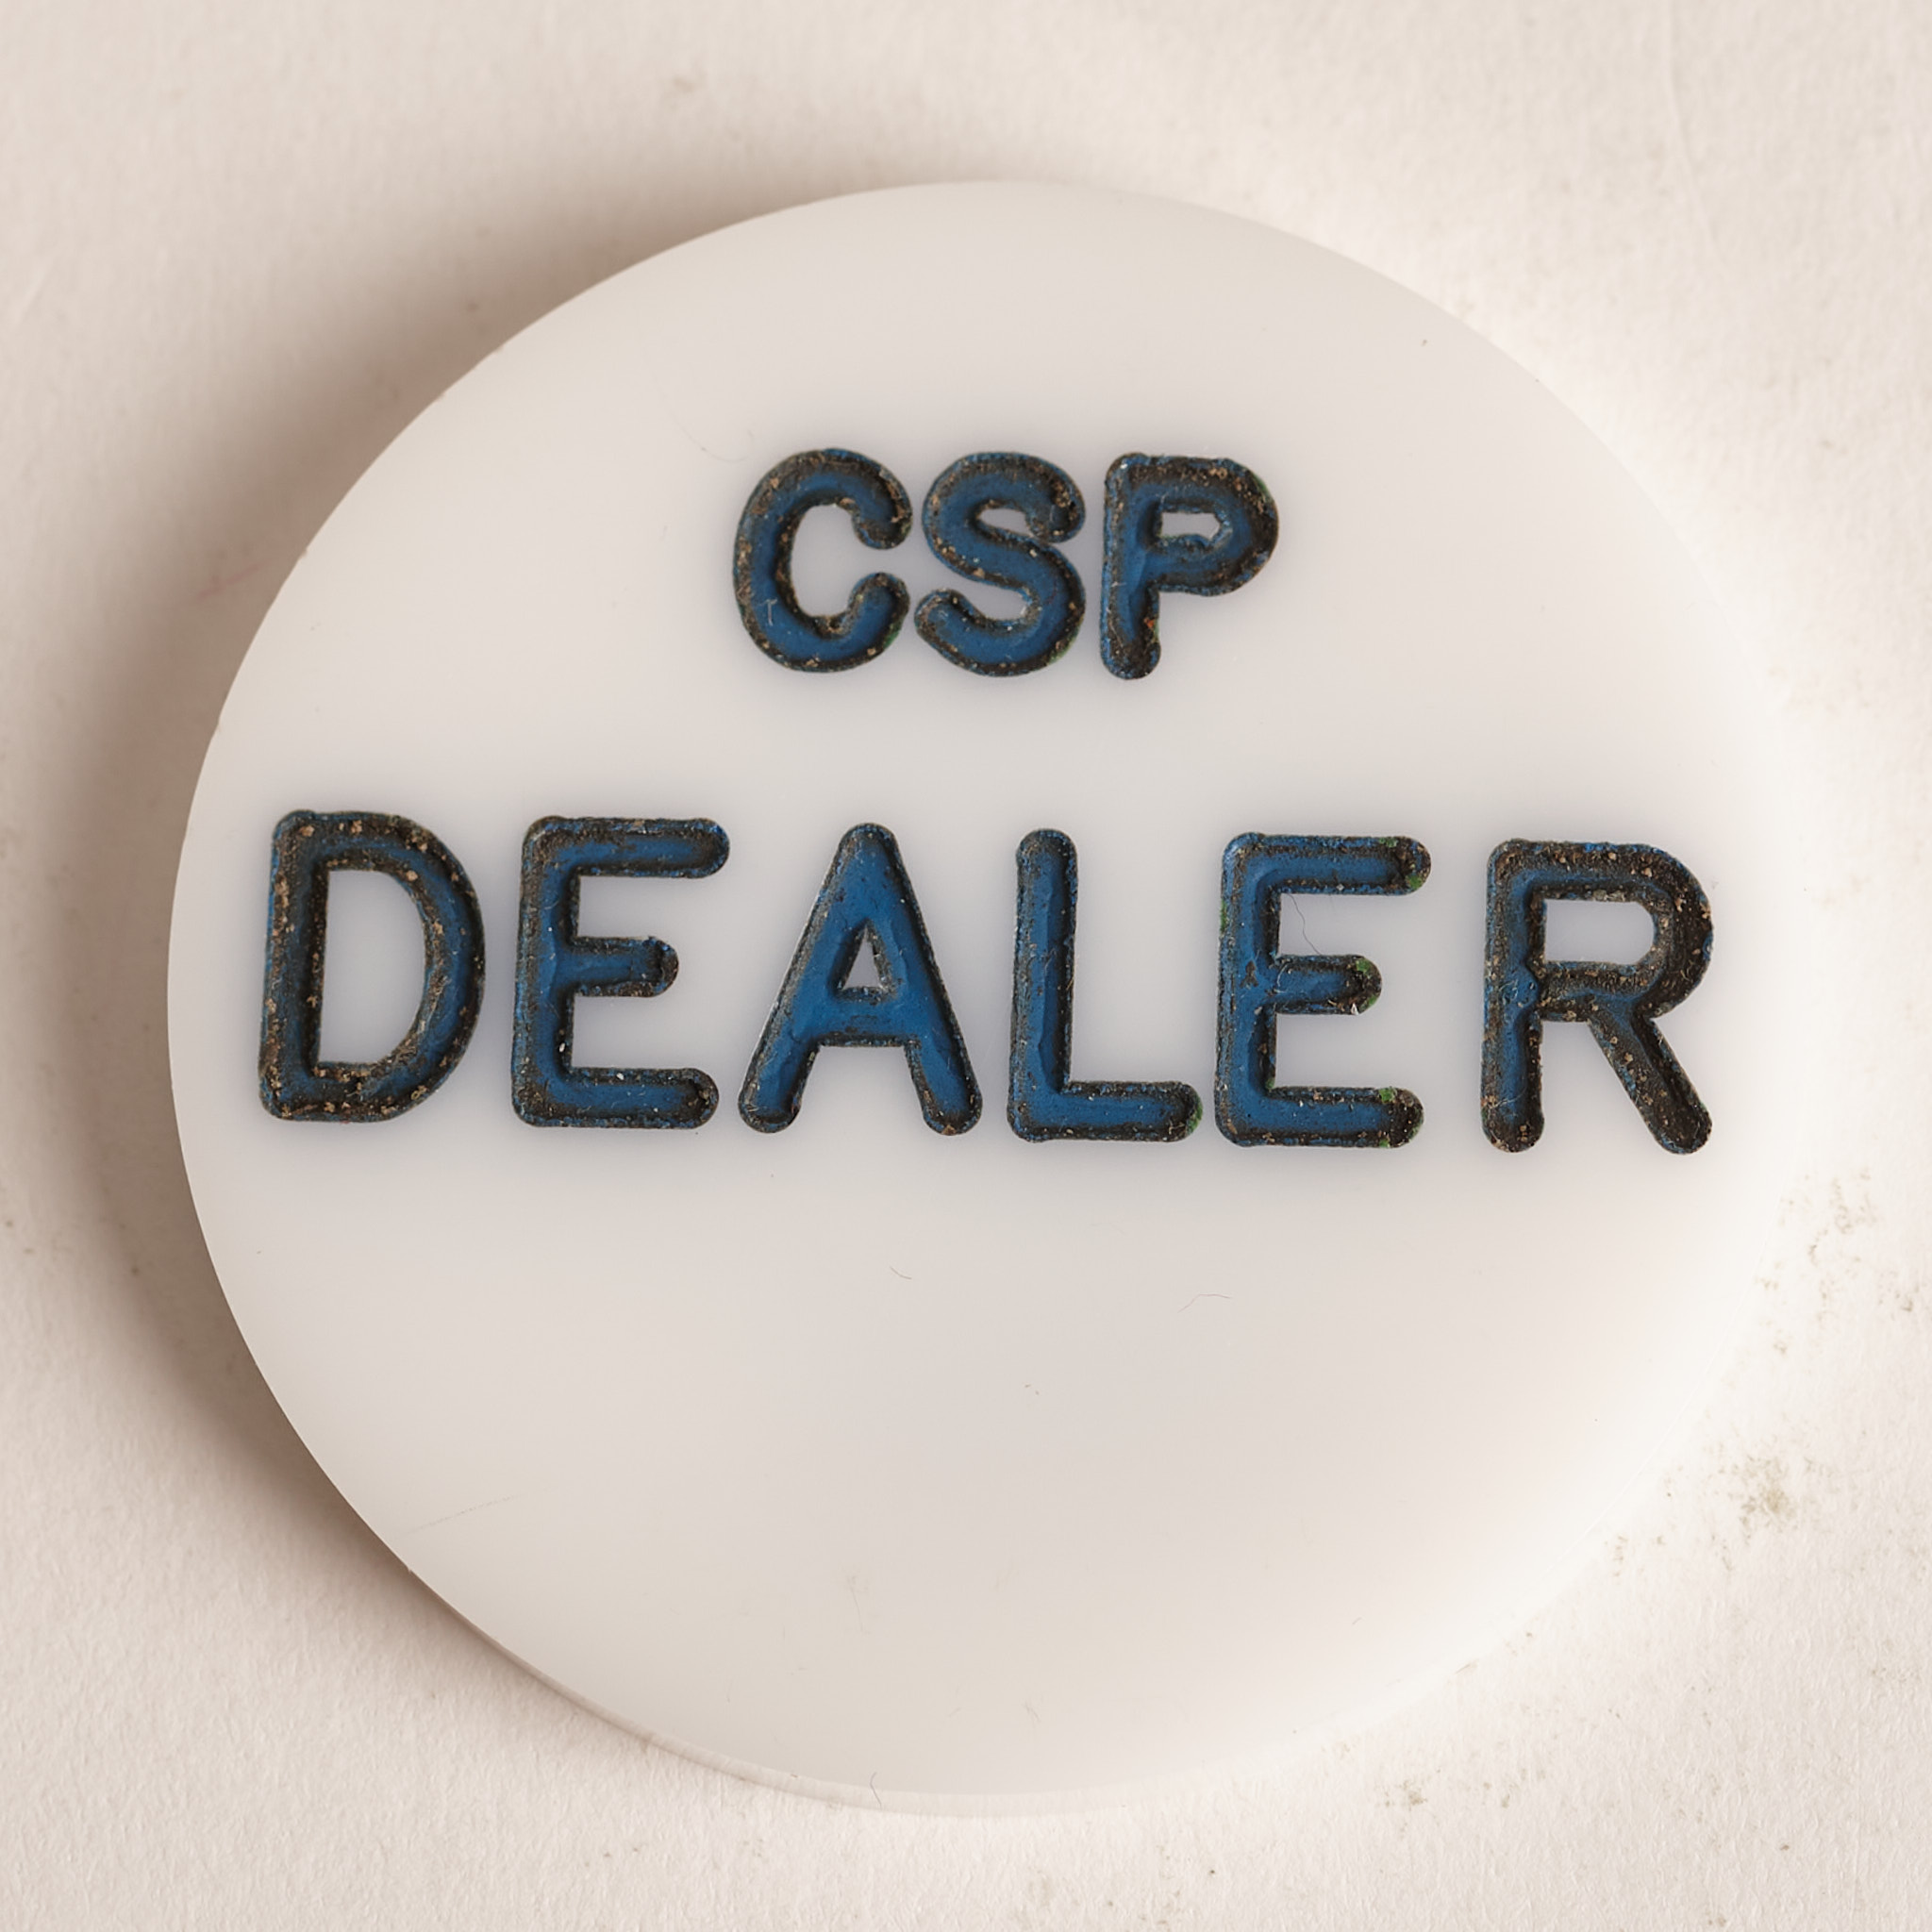 CSP CASINO SAN PABLO, DEALER, (Navy Blue Lettering), Poker Dealer Button